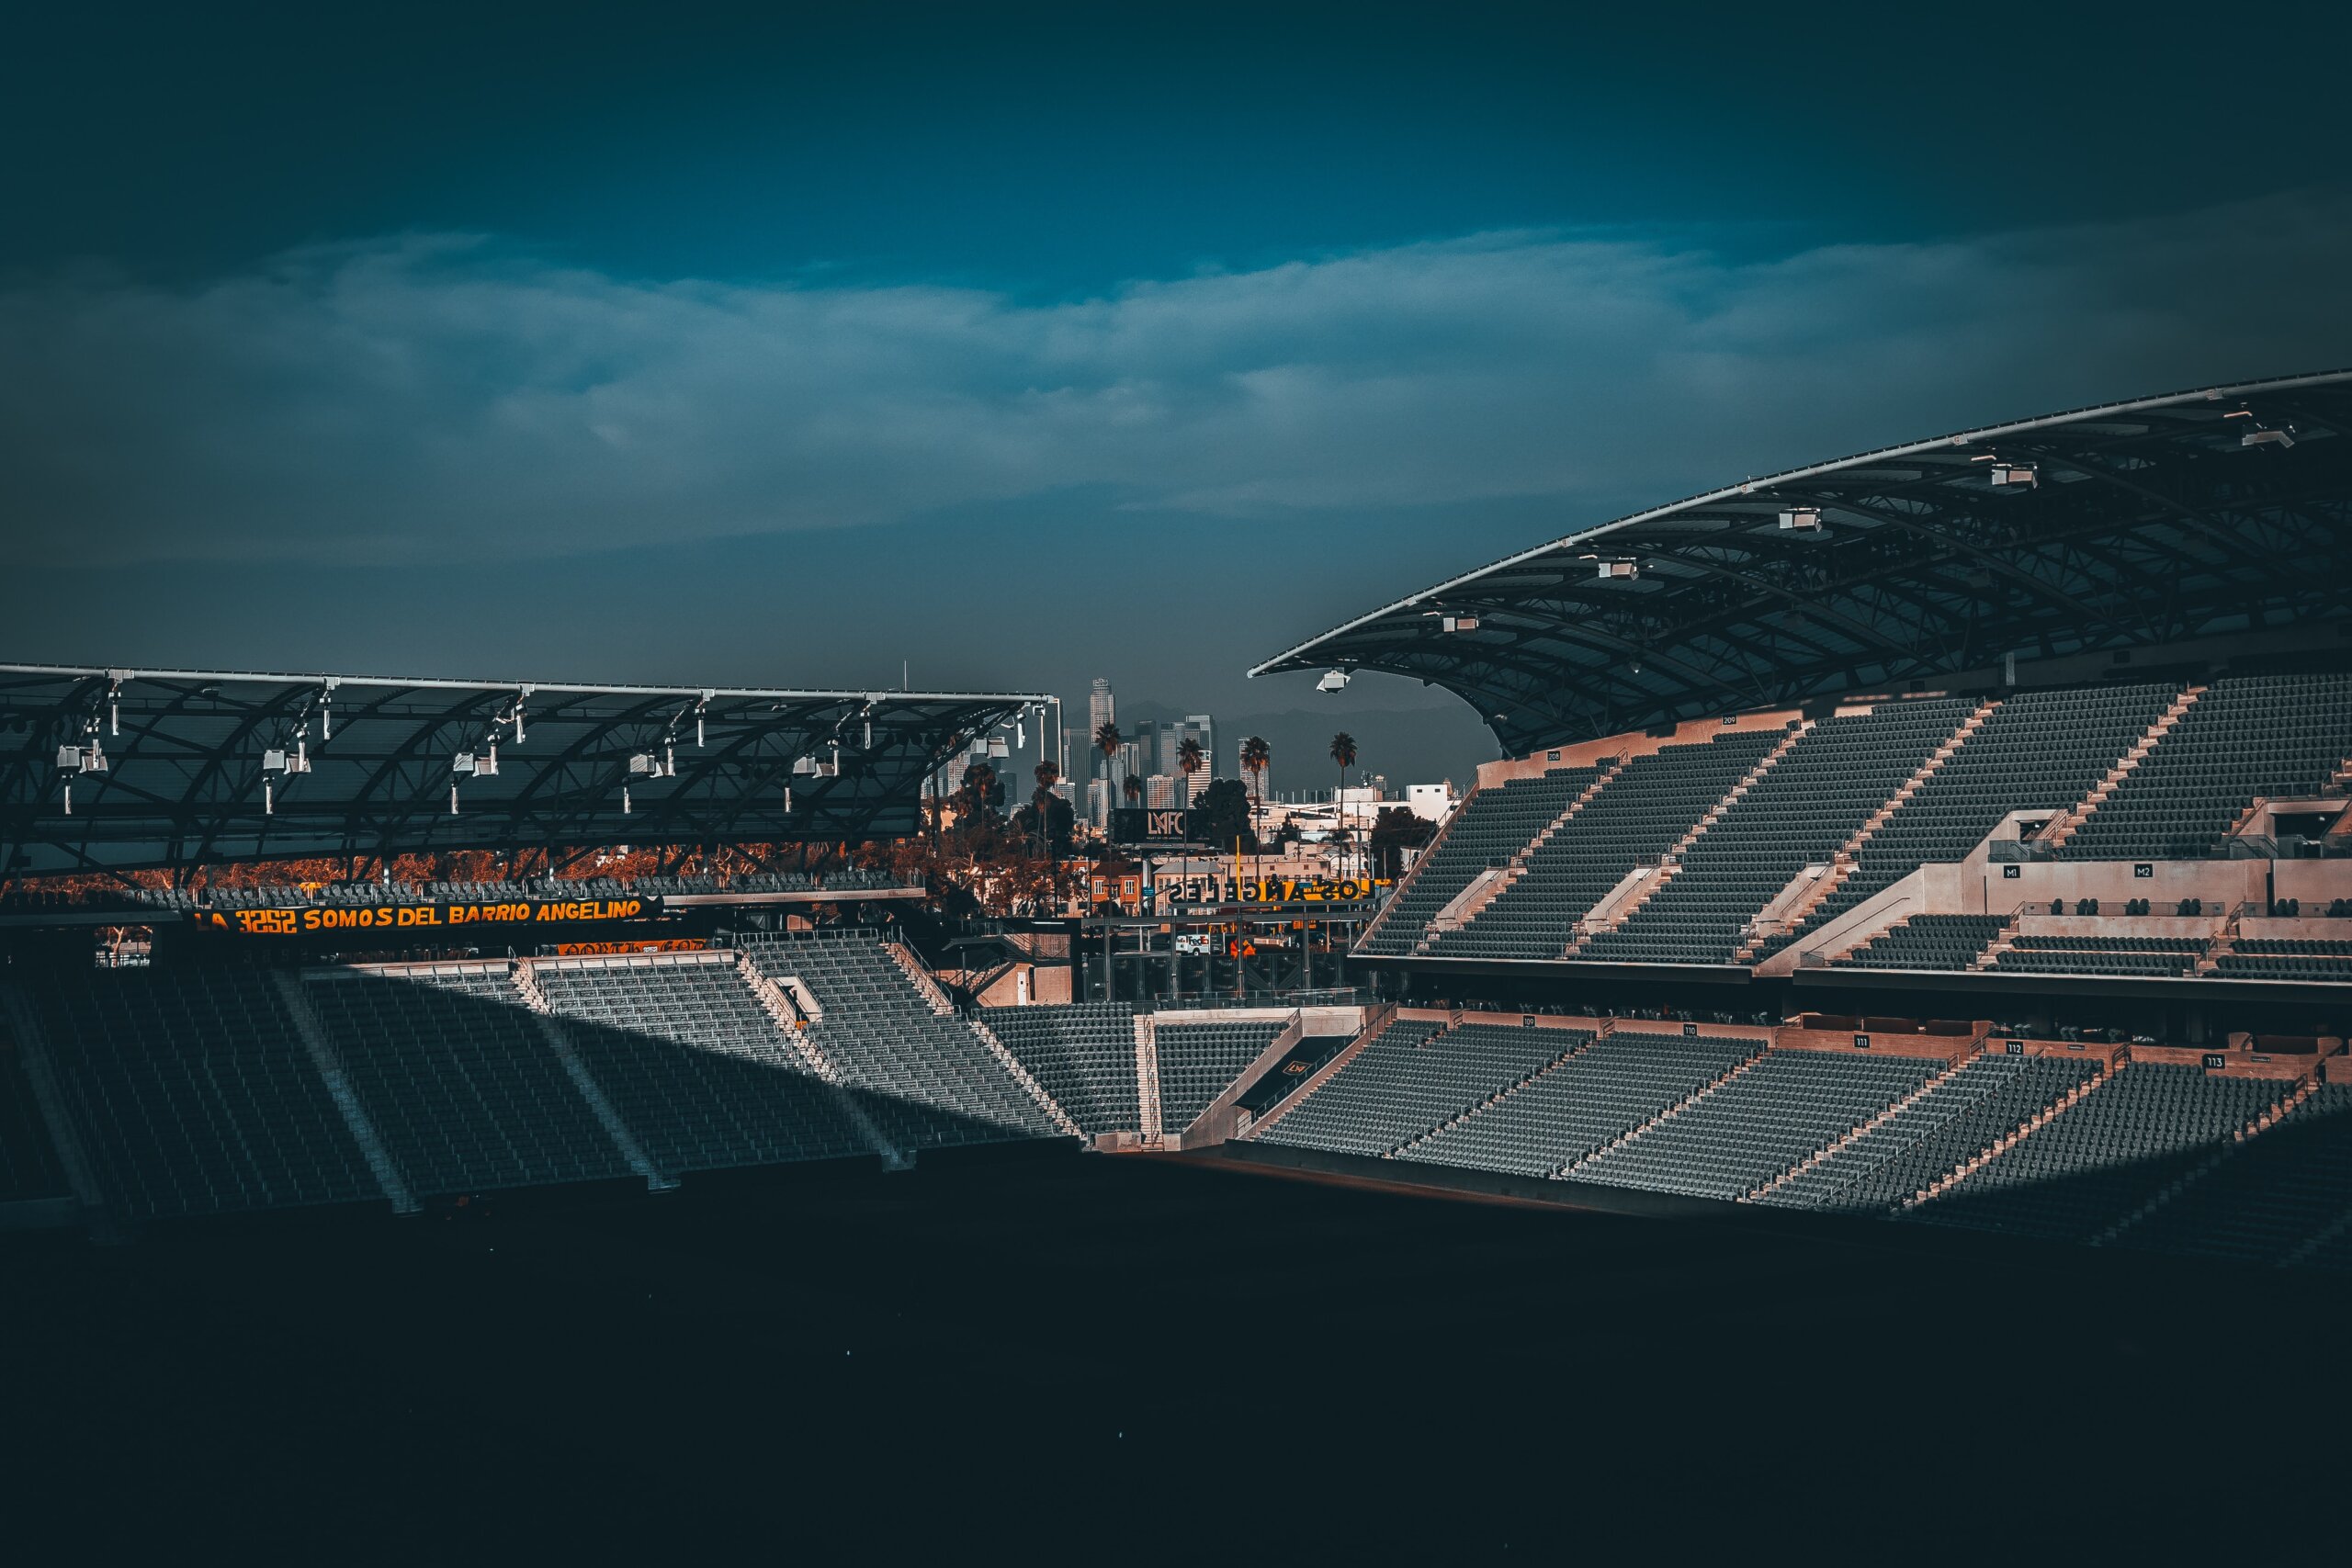 Picture of a stadium